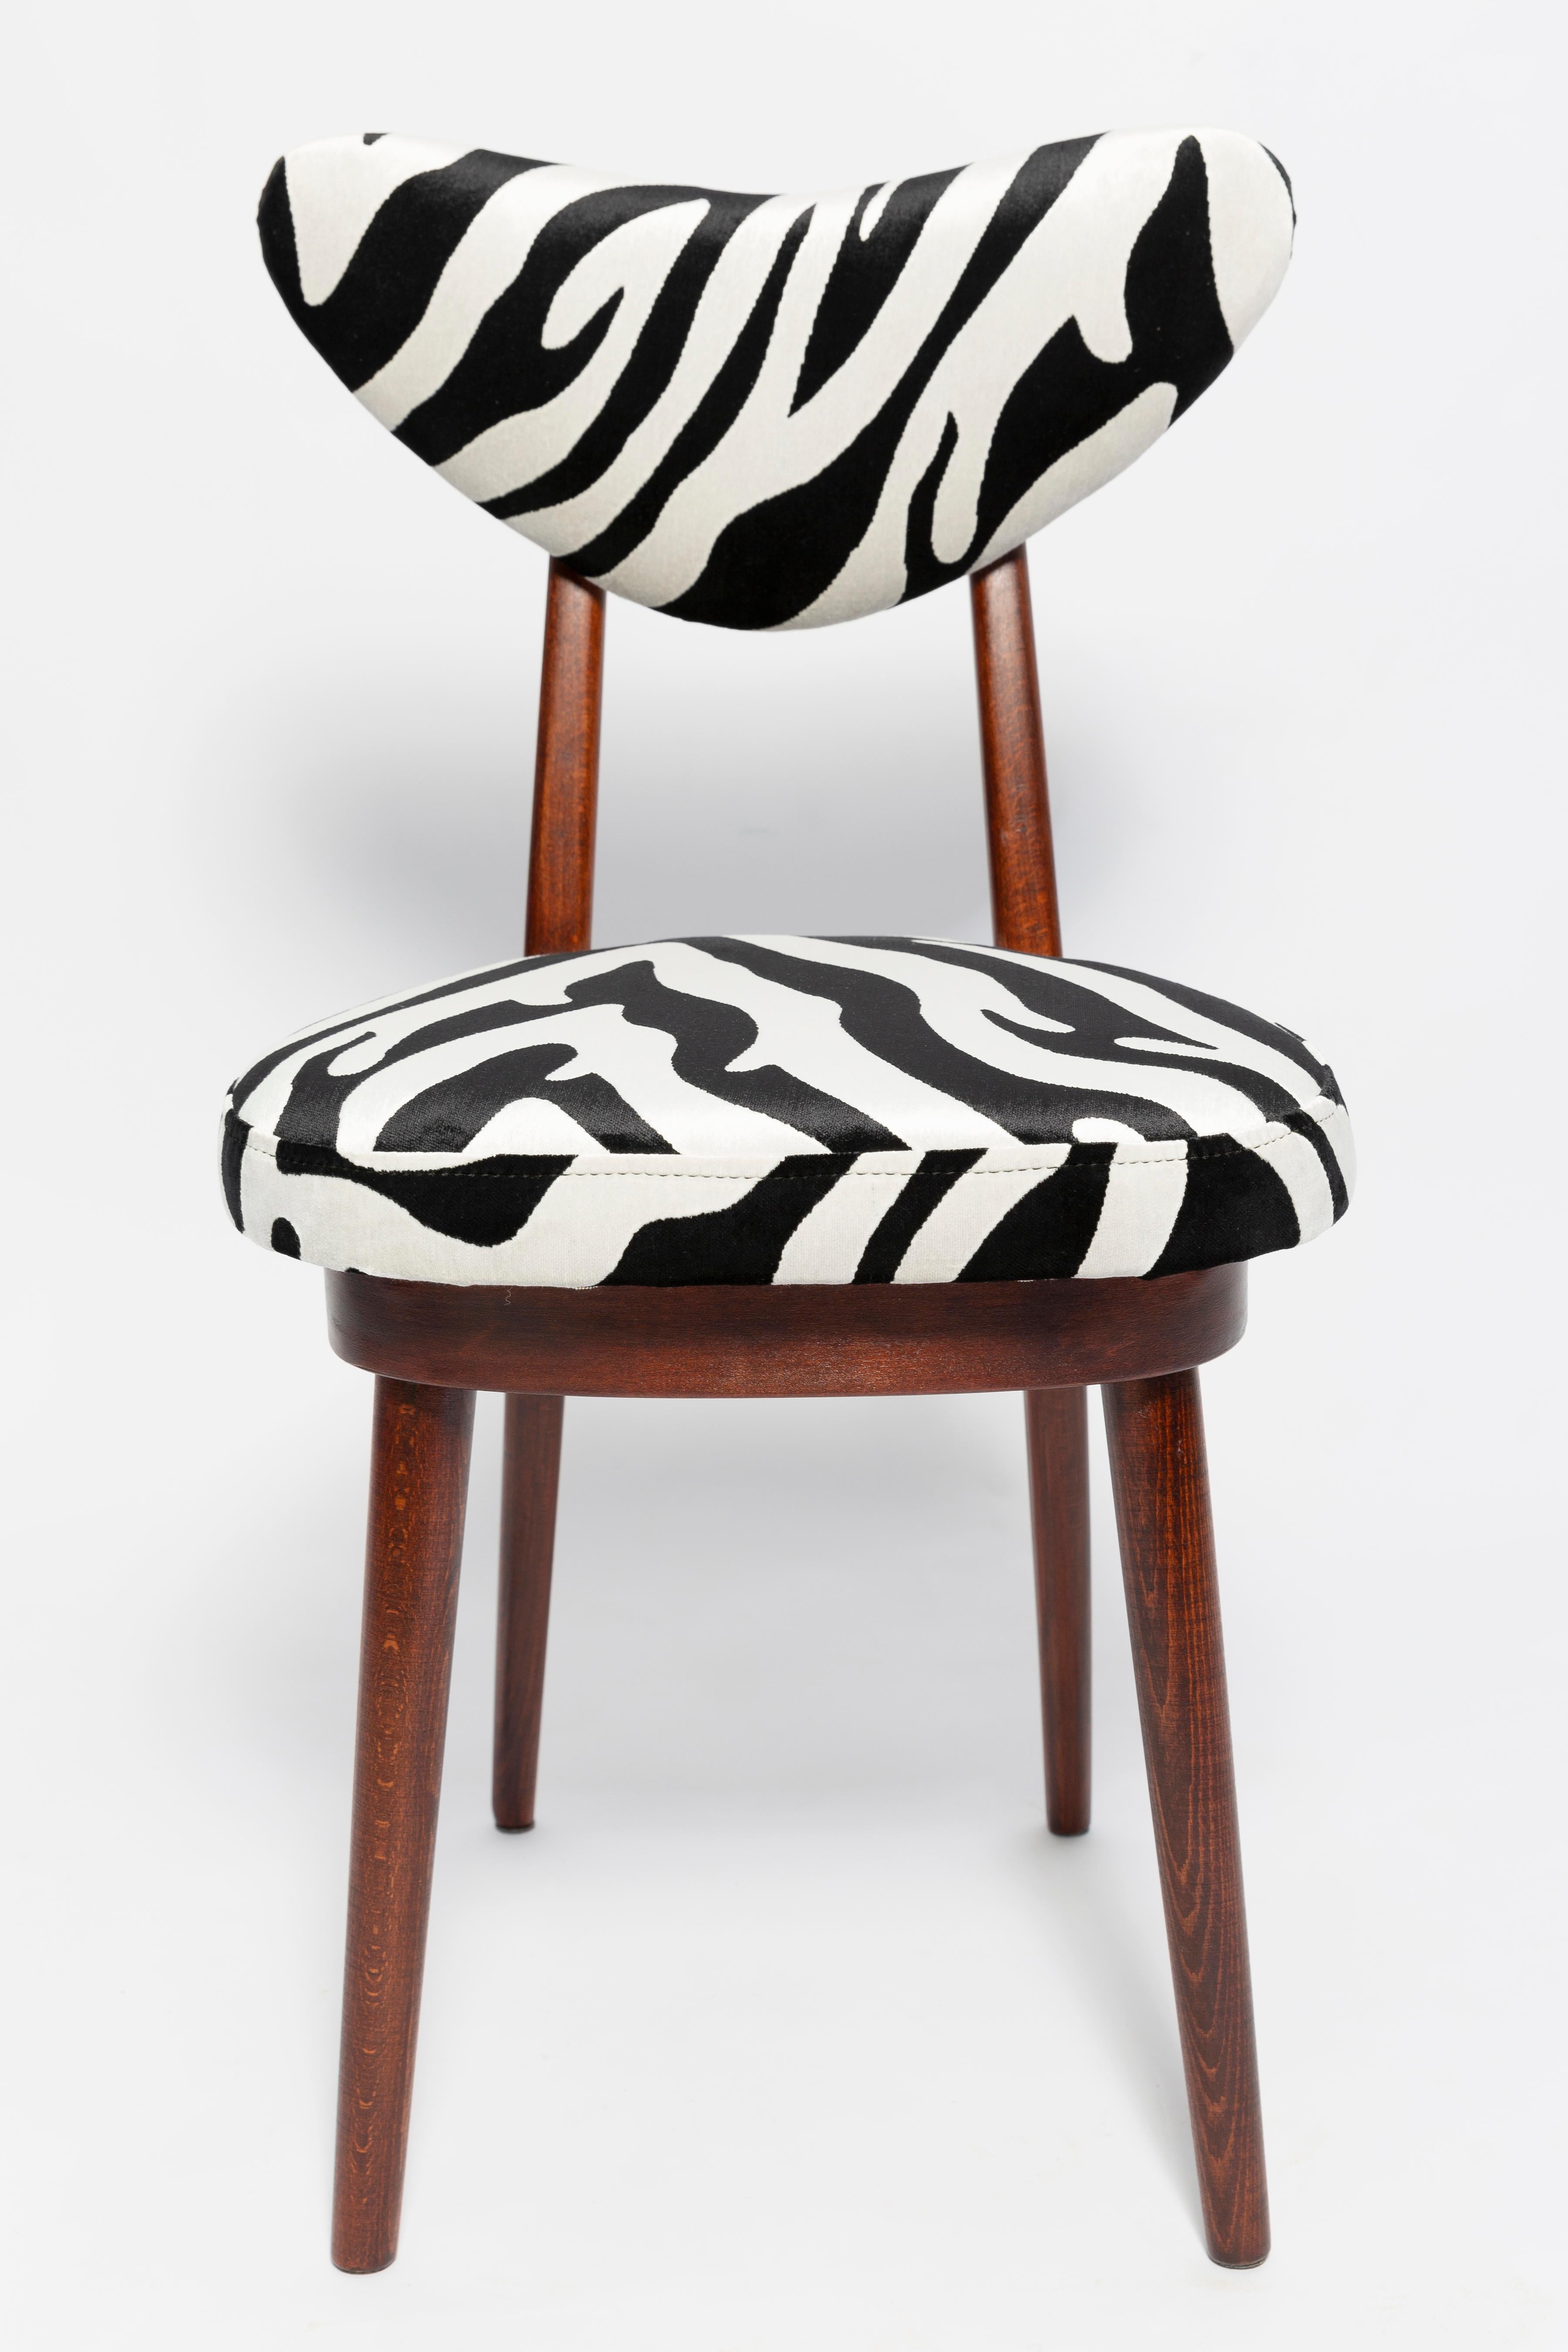 Midcentury Regency Zebra Black and White Heart Chair, Poland, 1960s For Sale 4